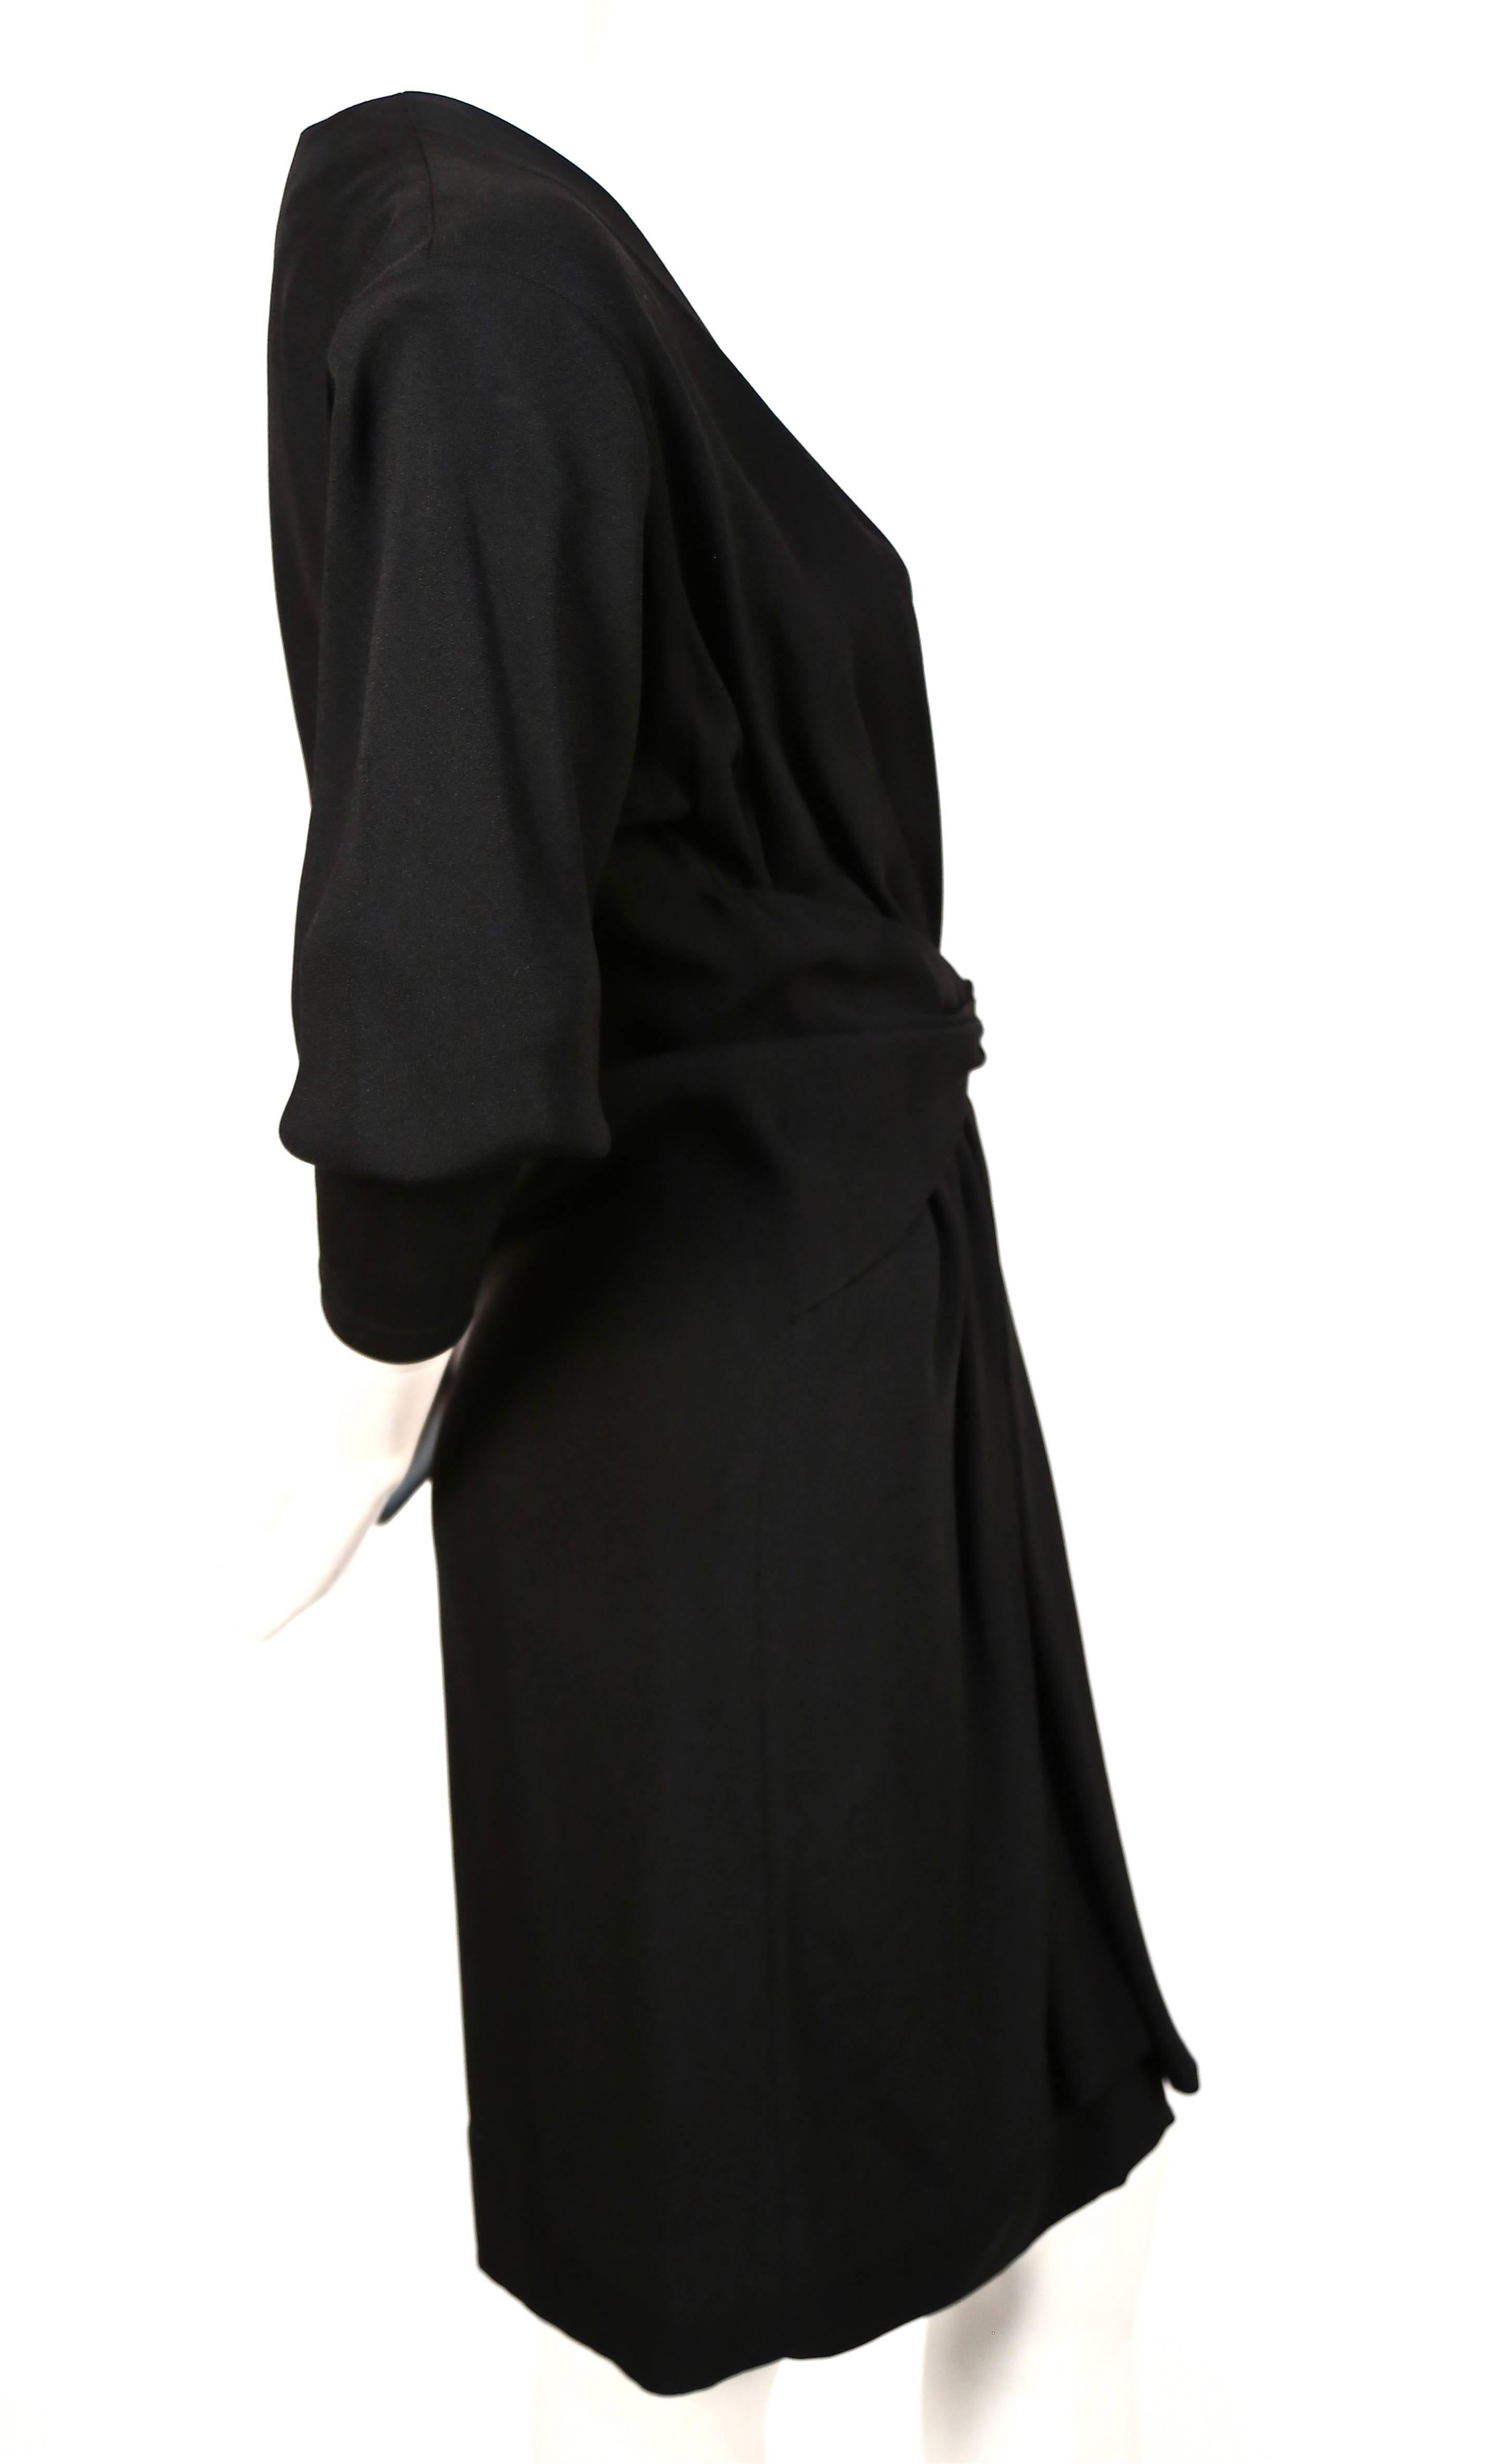 Black 1970's SAINT LAURENT black dress with plunging neckline and draped 